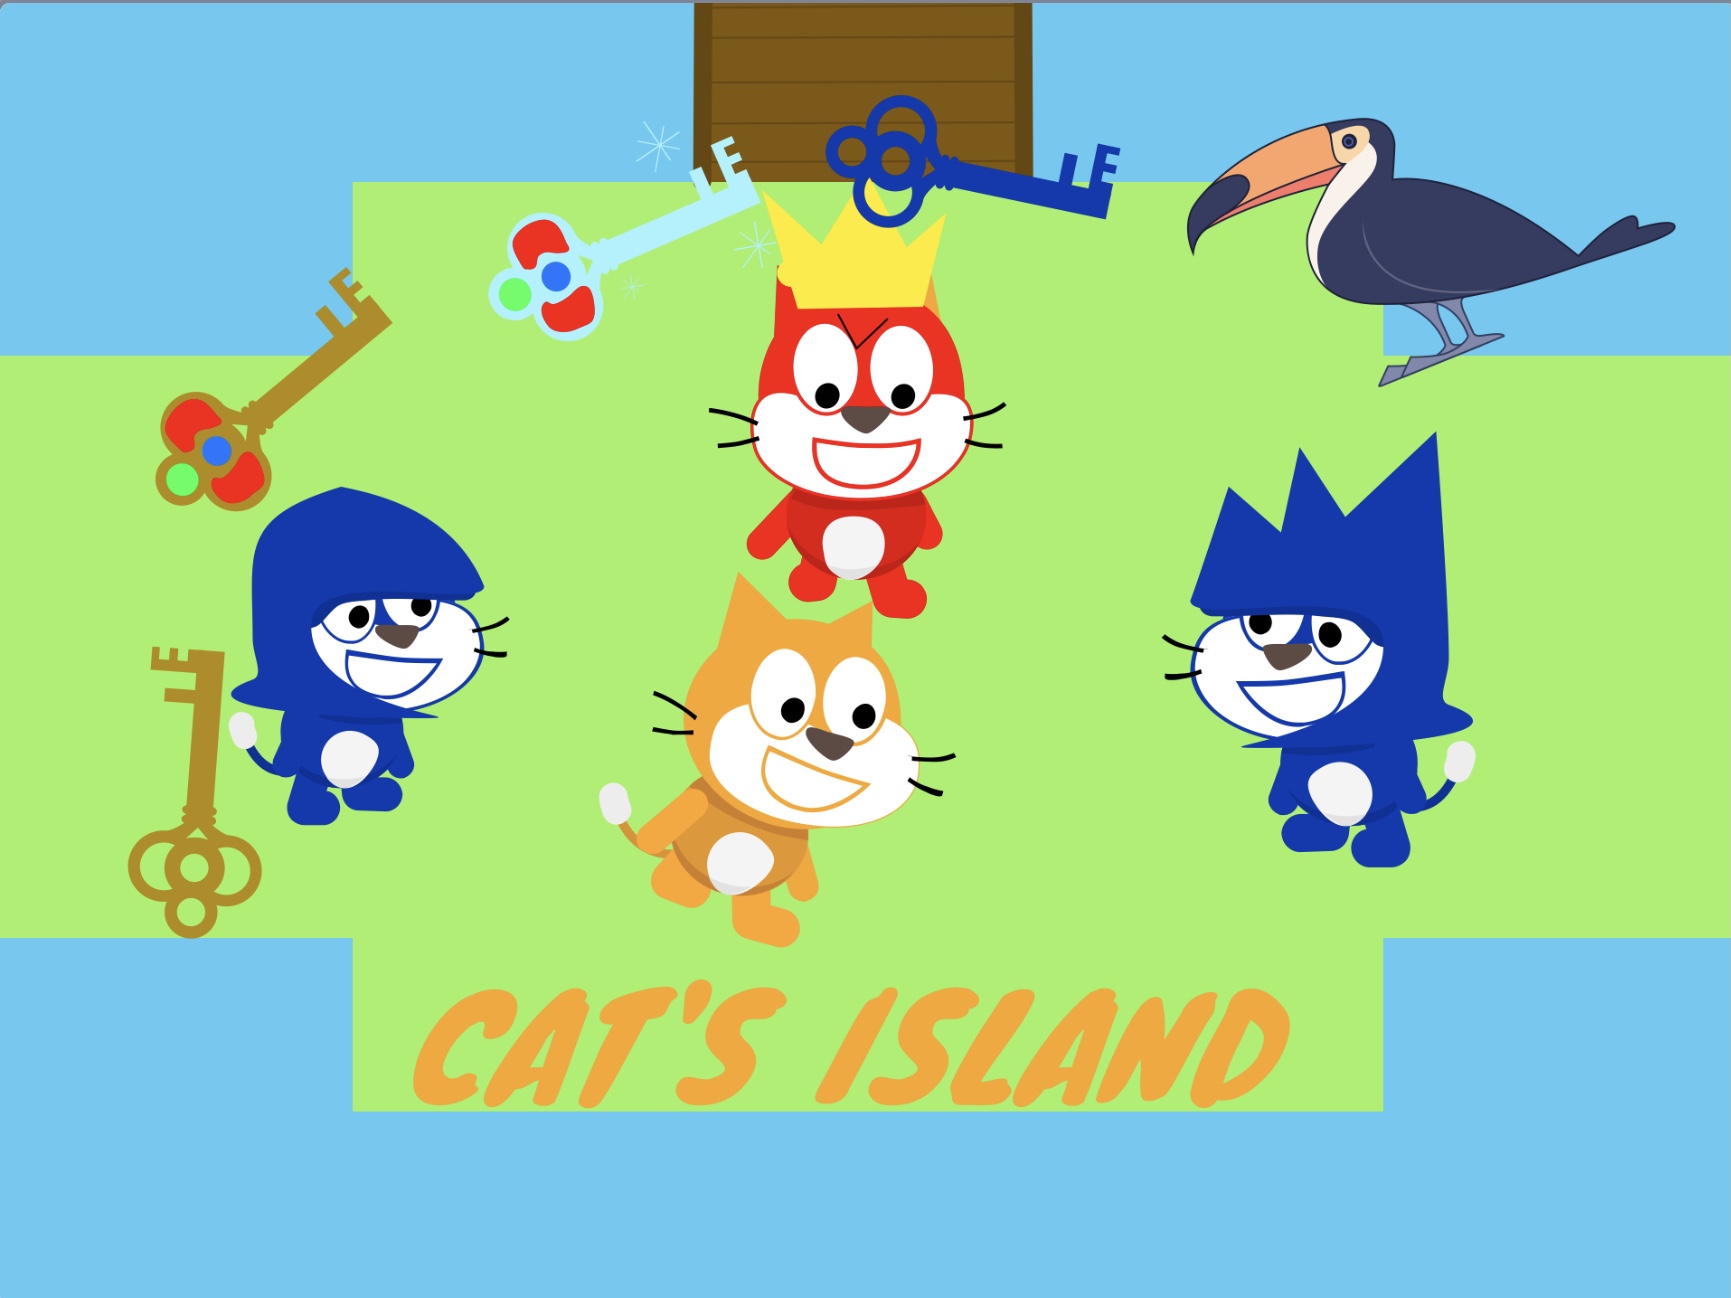 Cat’s Island